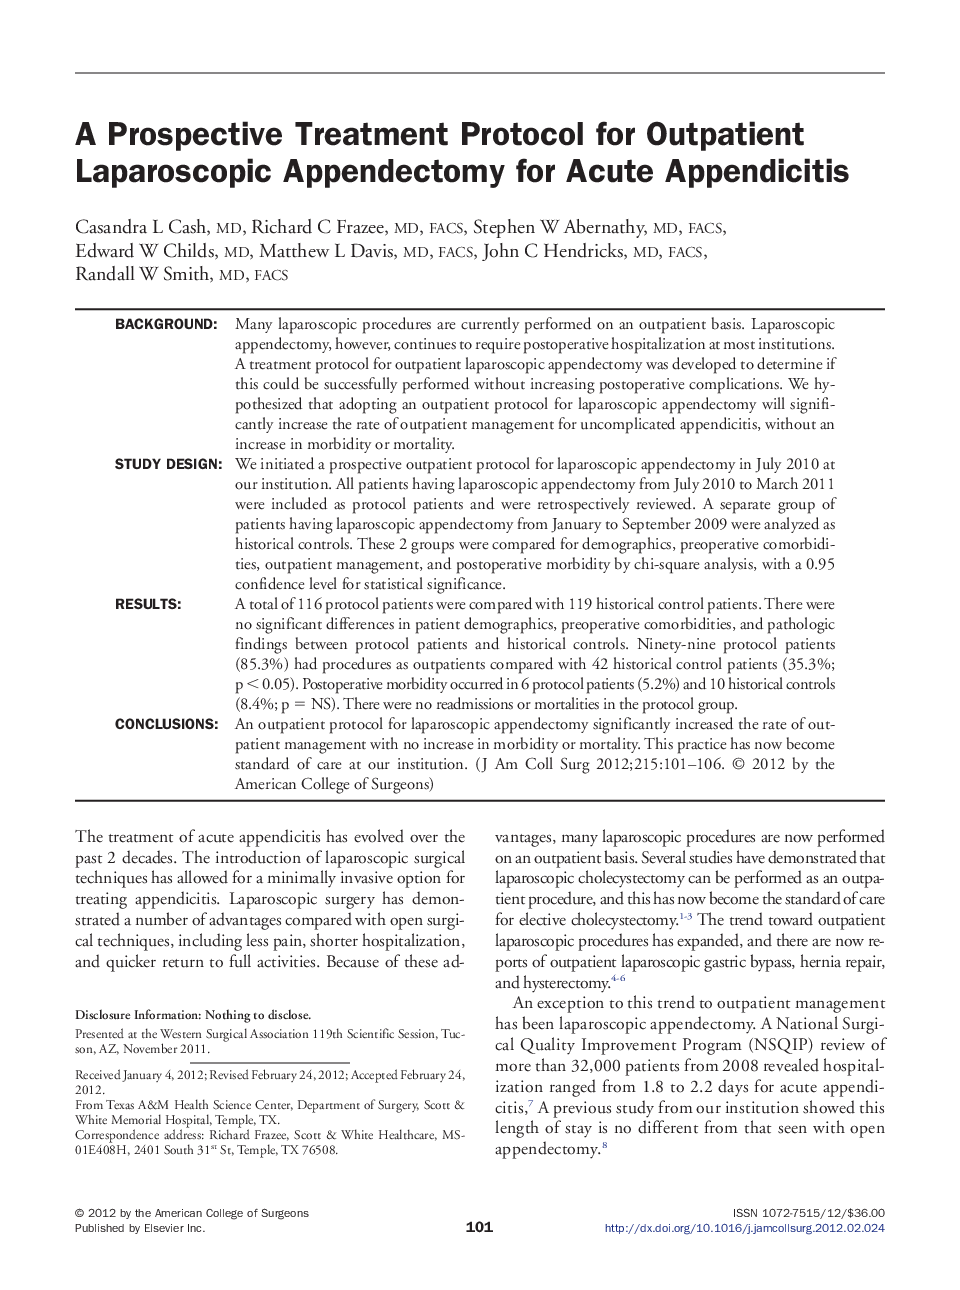 A Prospective Treatment Protocol for Outpatient Laparoscopic Appendectomy for Acute Appendicitis 